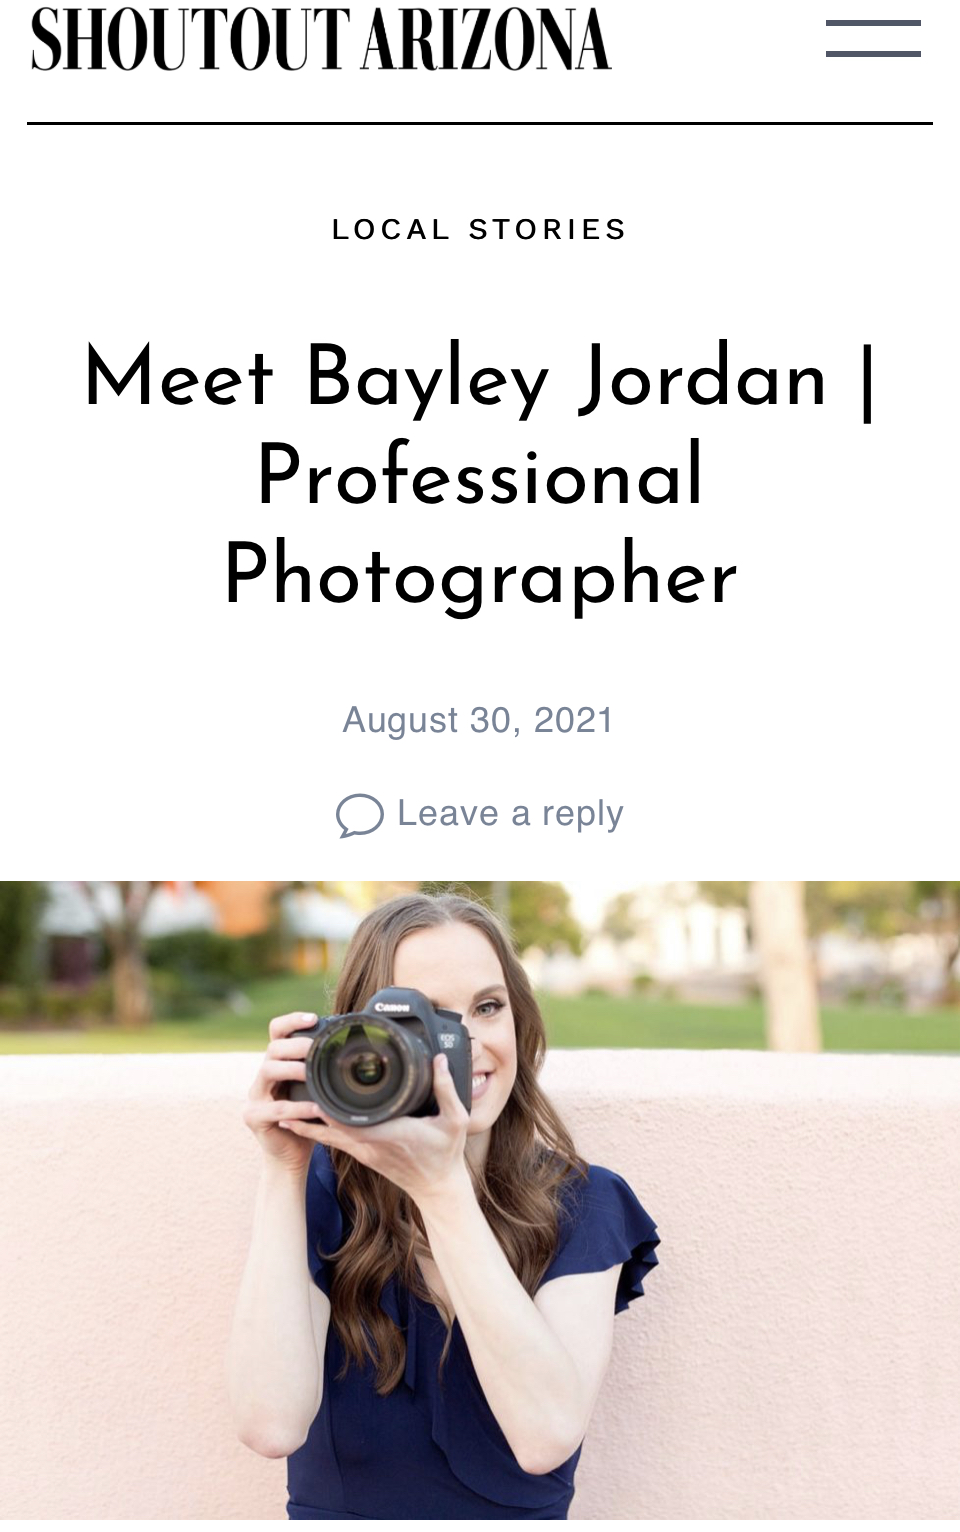 Image of Bayley Jordan Photography featured in Shoutout Arizona